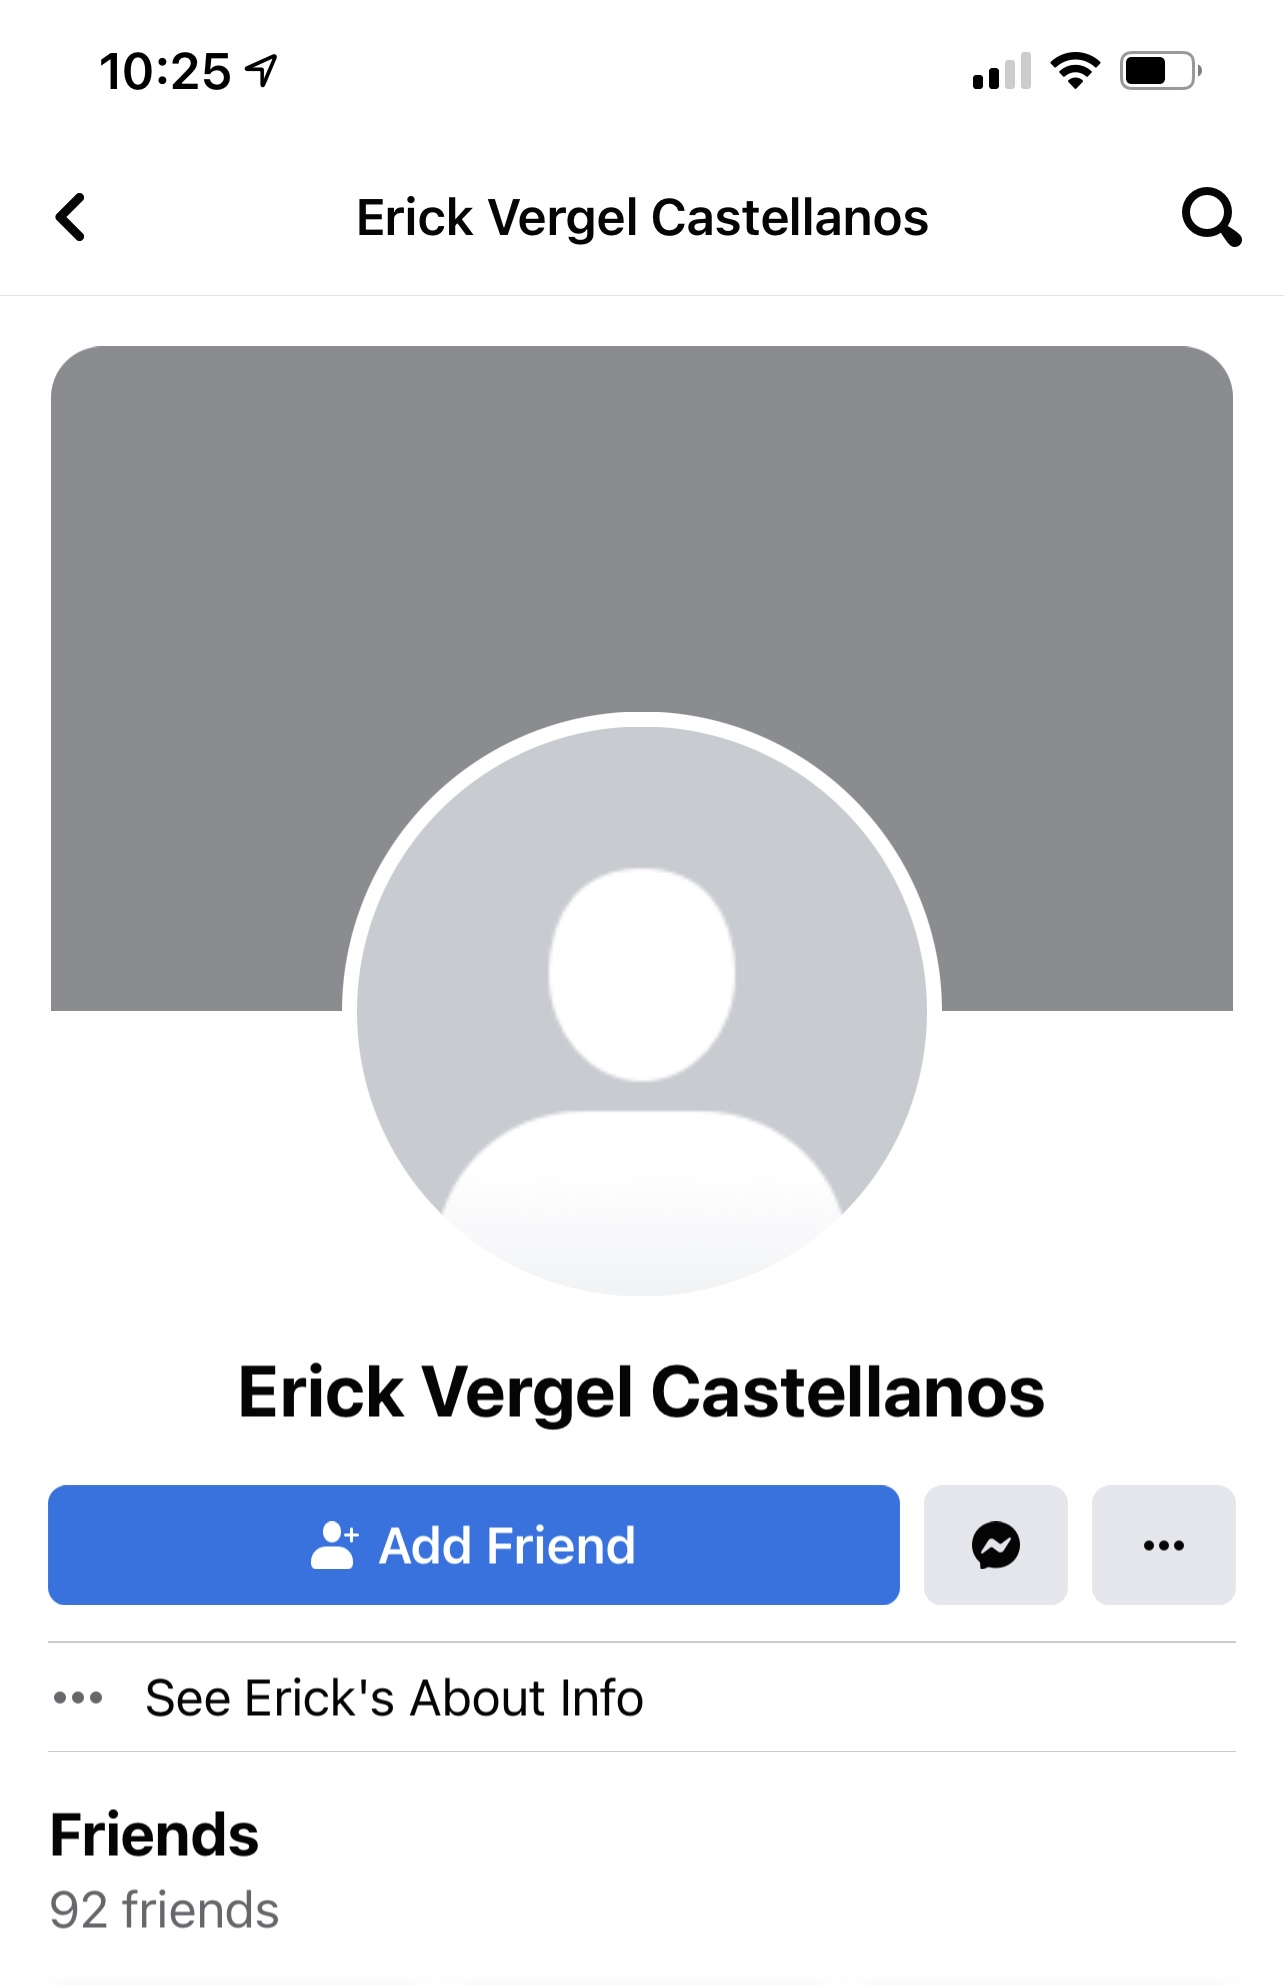 Erick Vergel Castellanos